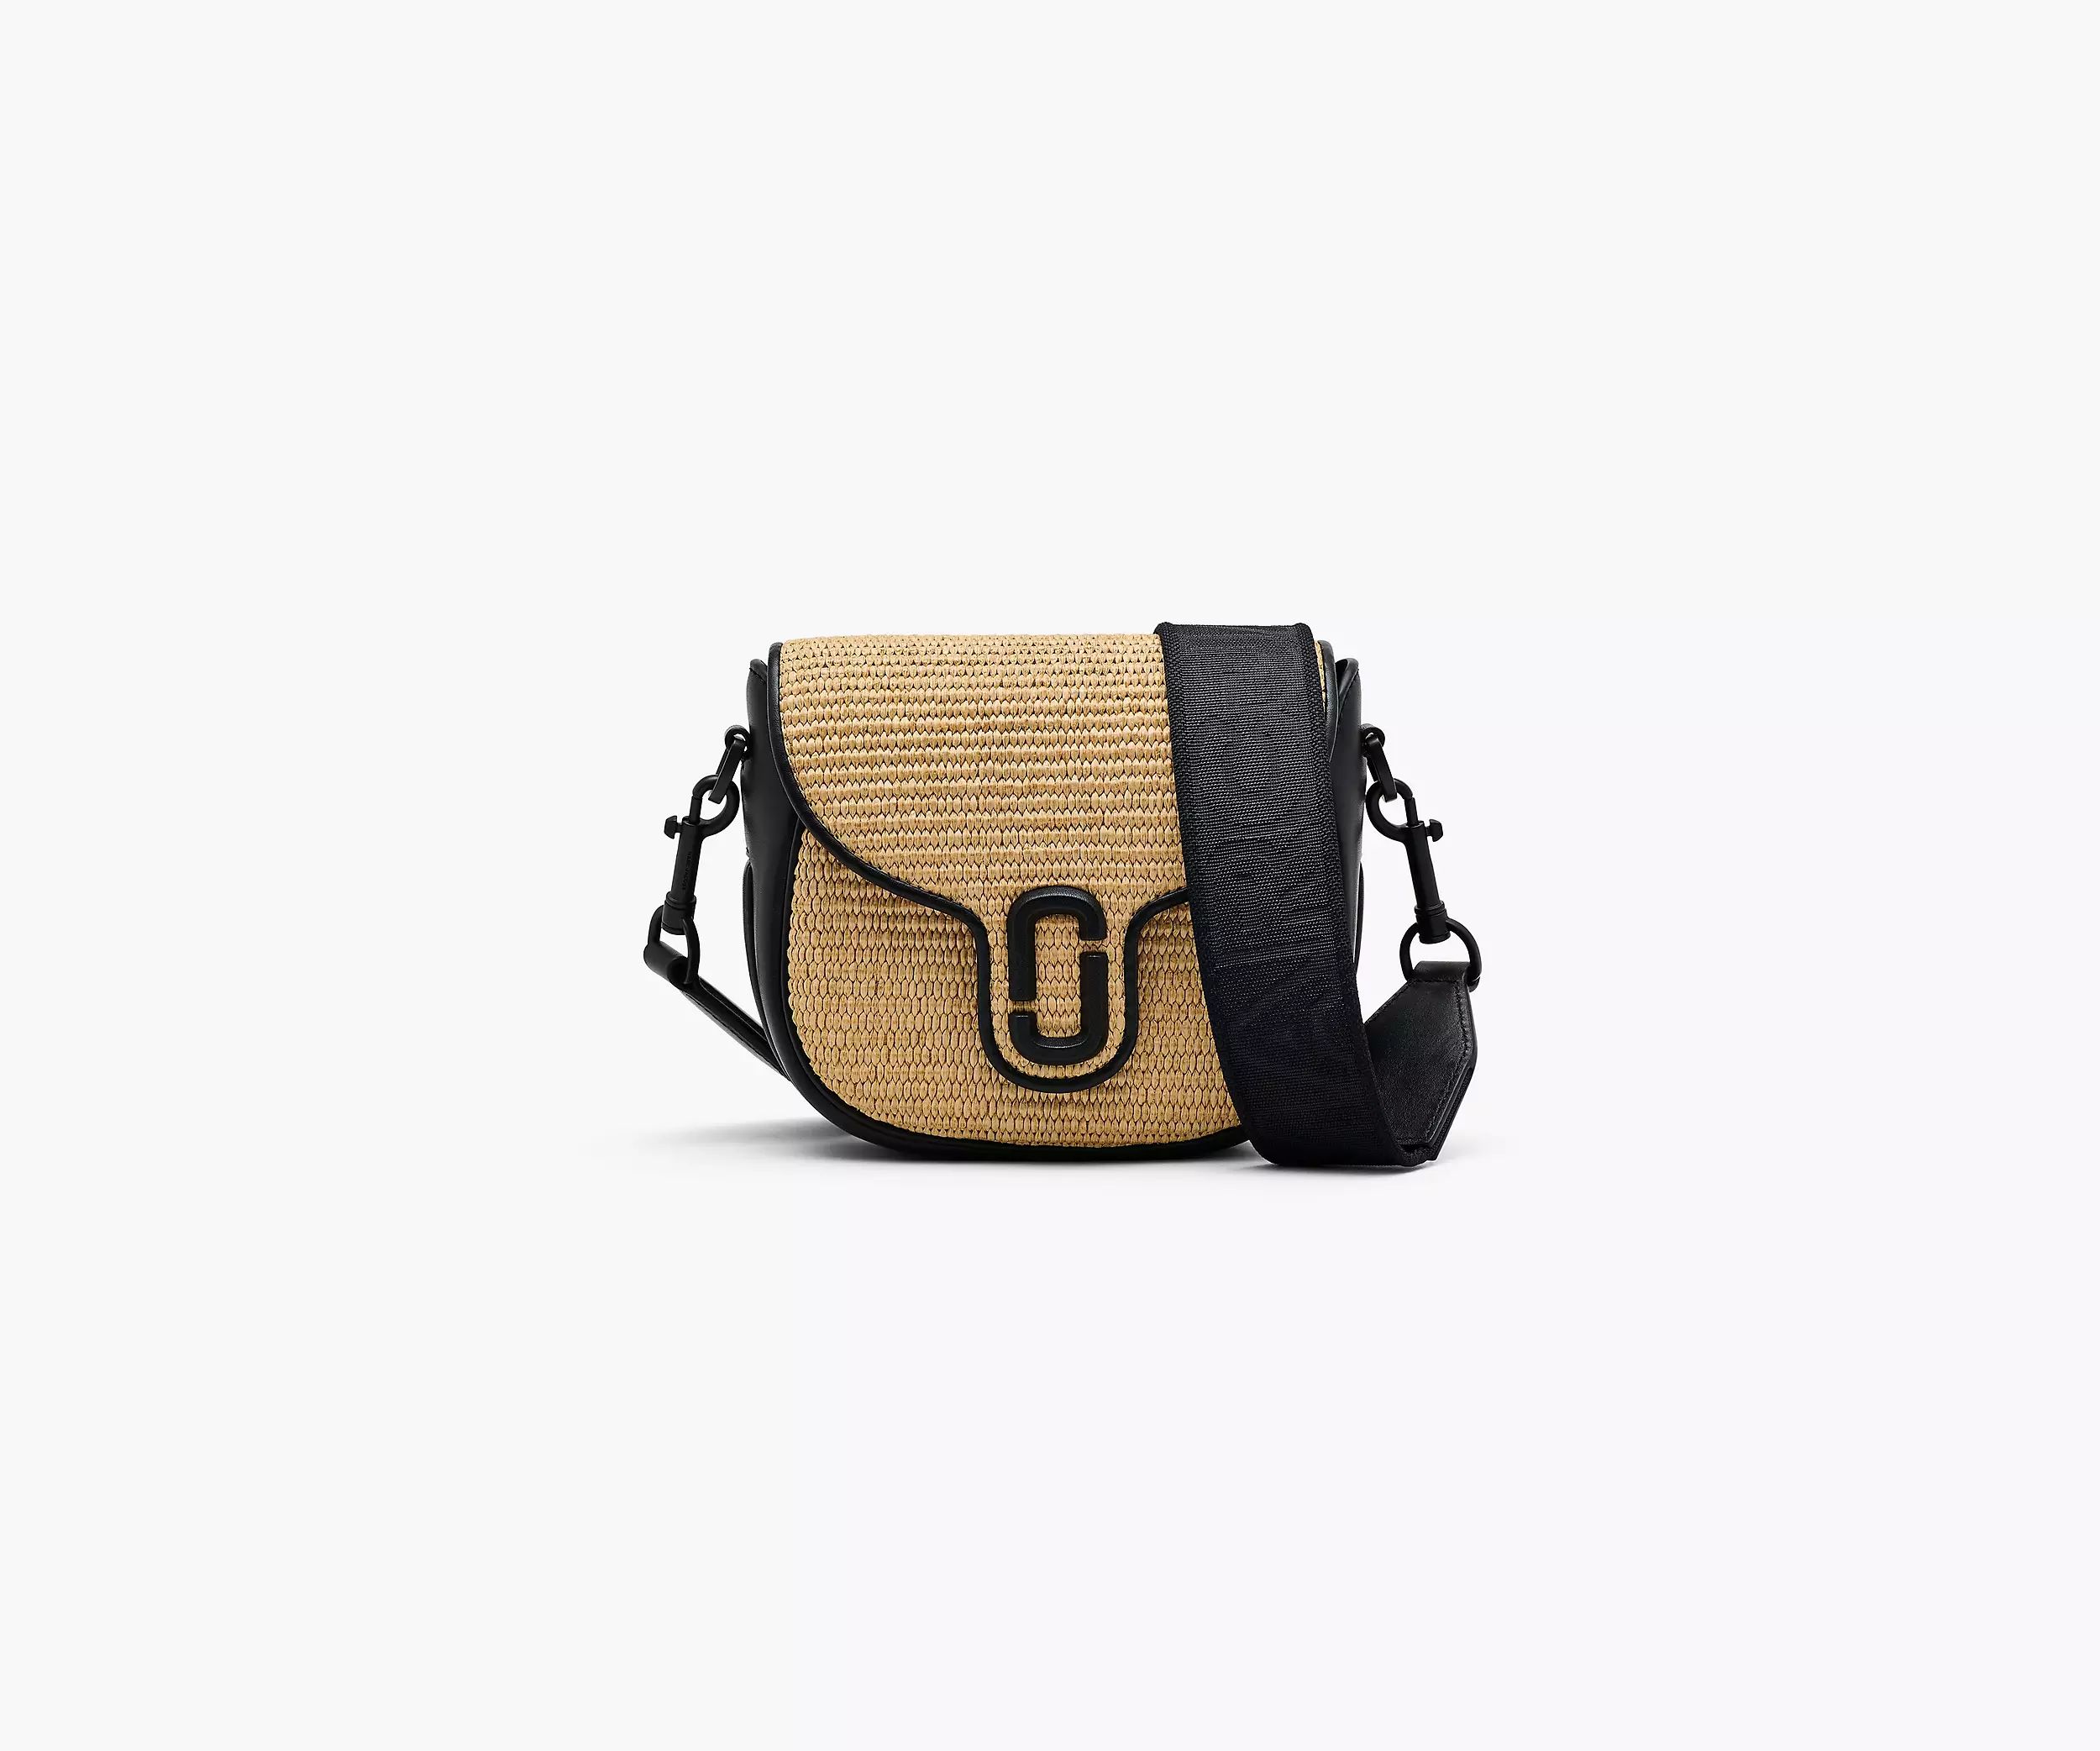 The Woven J Marc Small Saddle Bag | Marc Jacobs